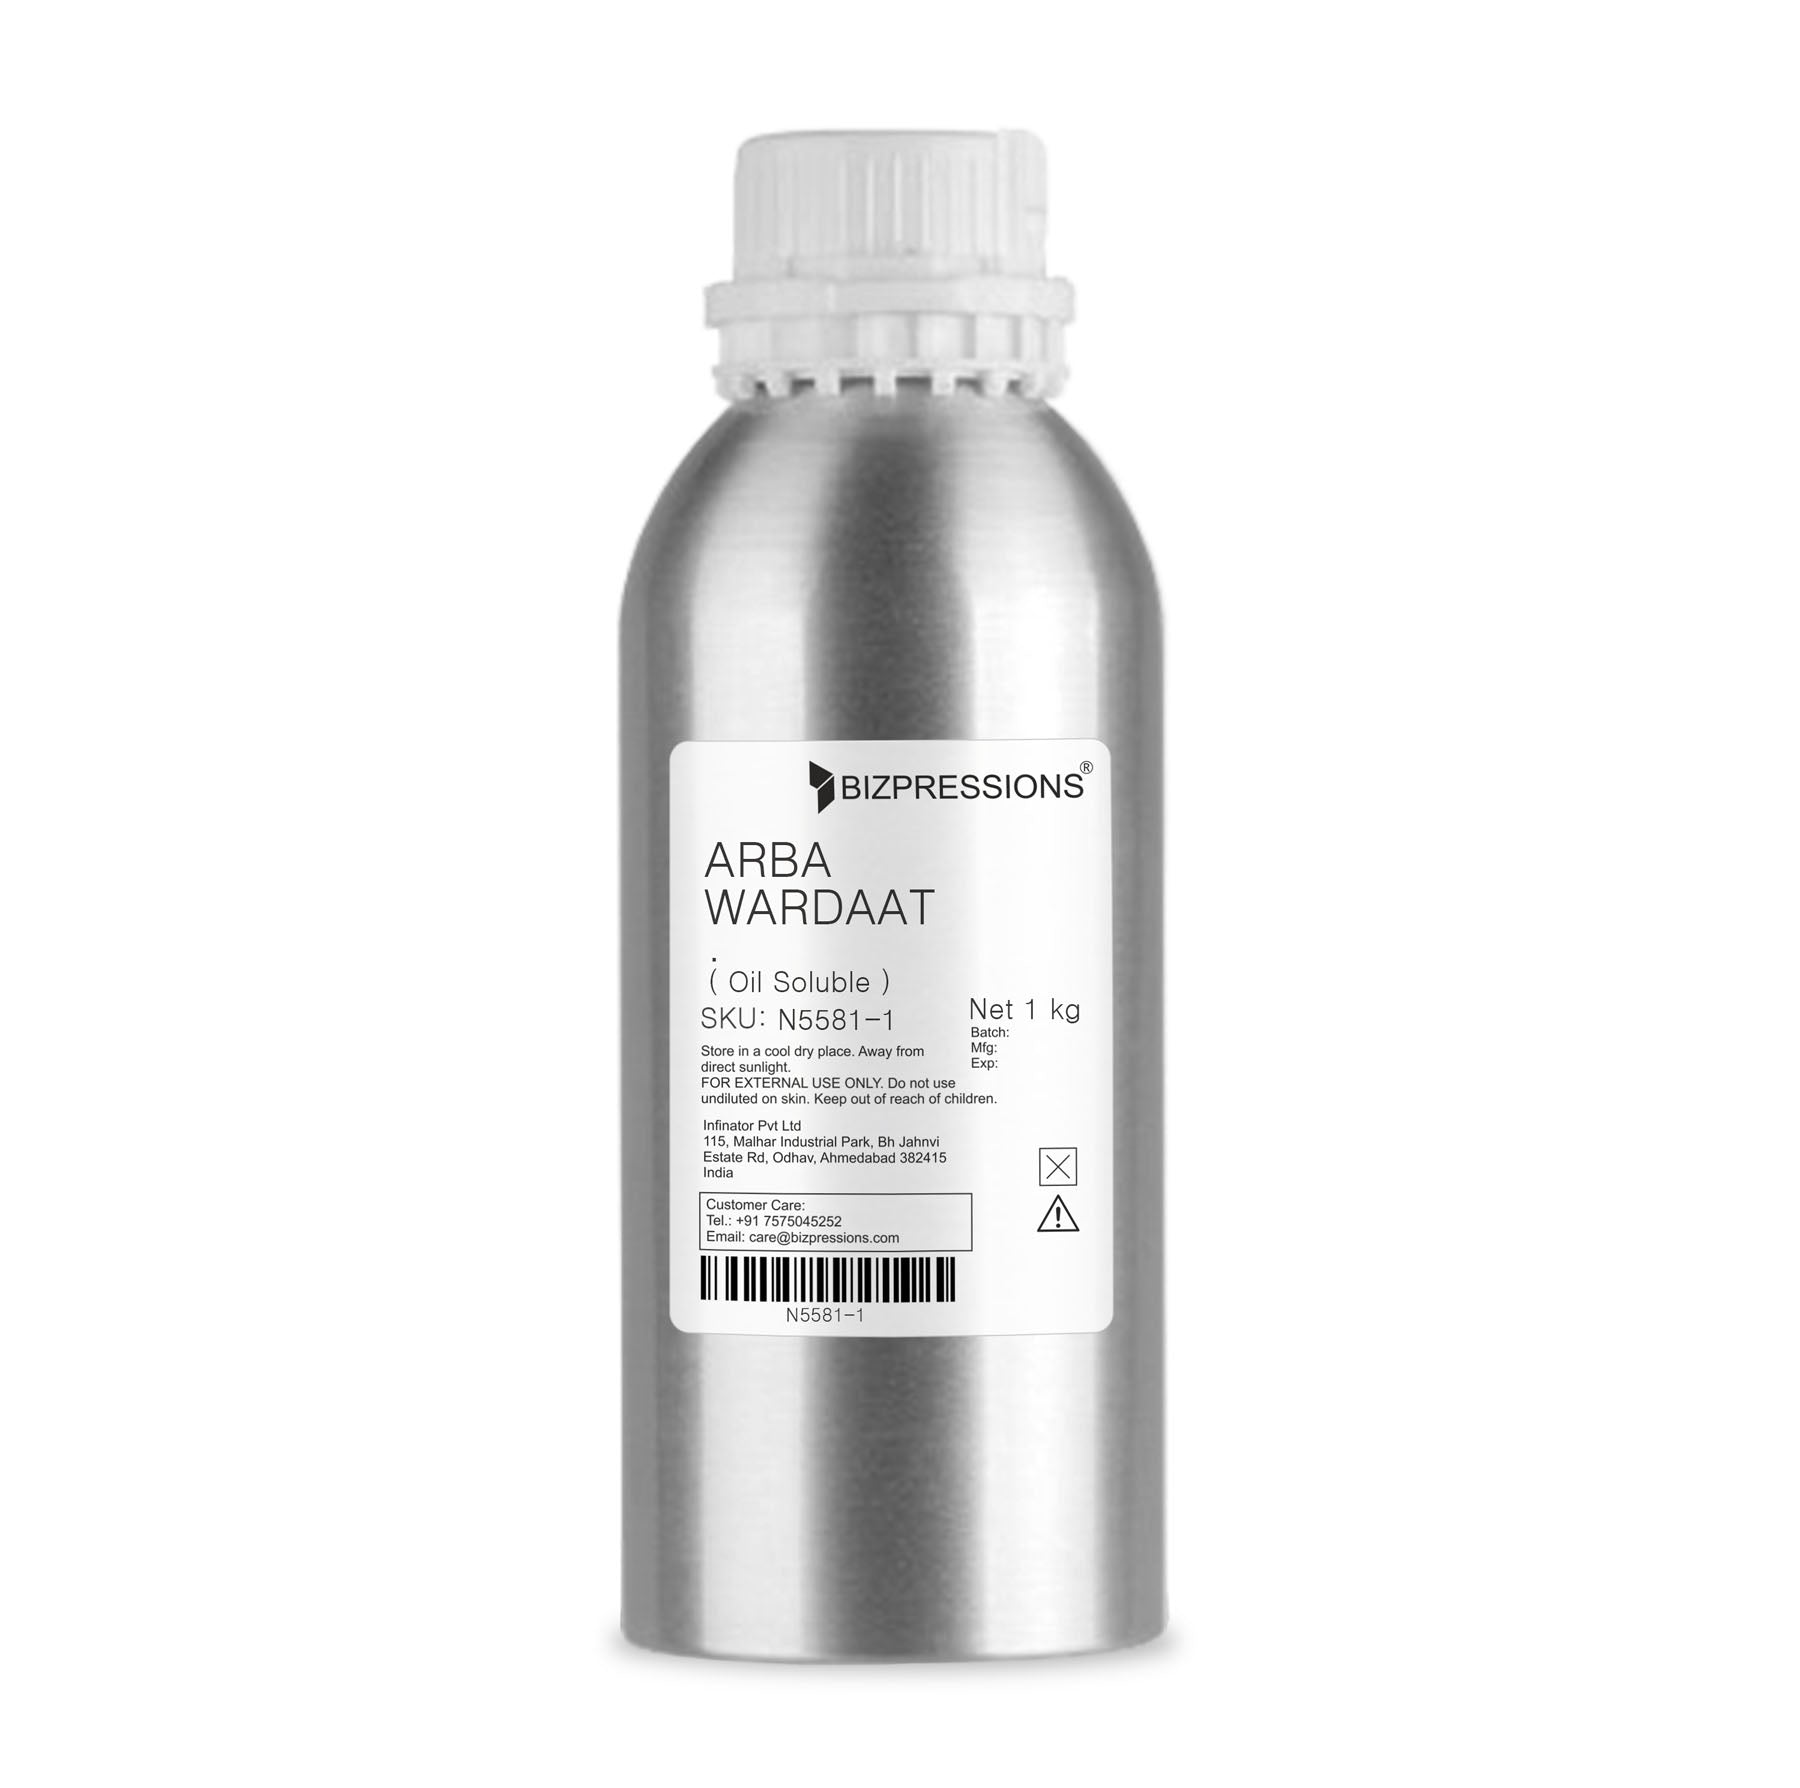 ARBA WARDAAT - Fragrance ( Oil Soluble ) - 1 kg